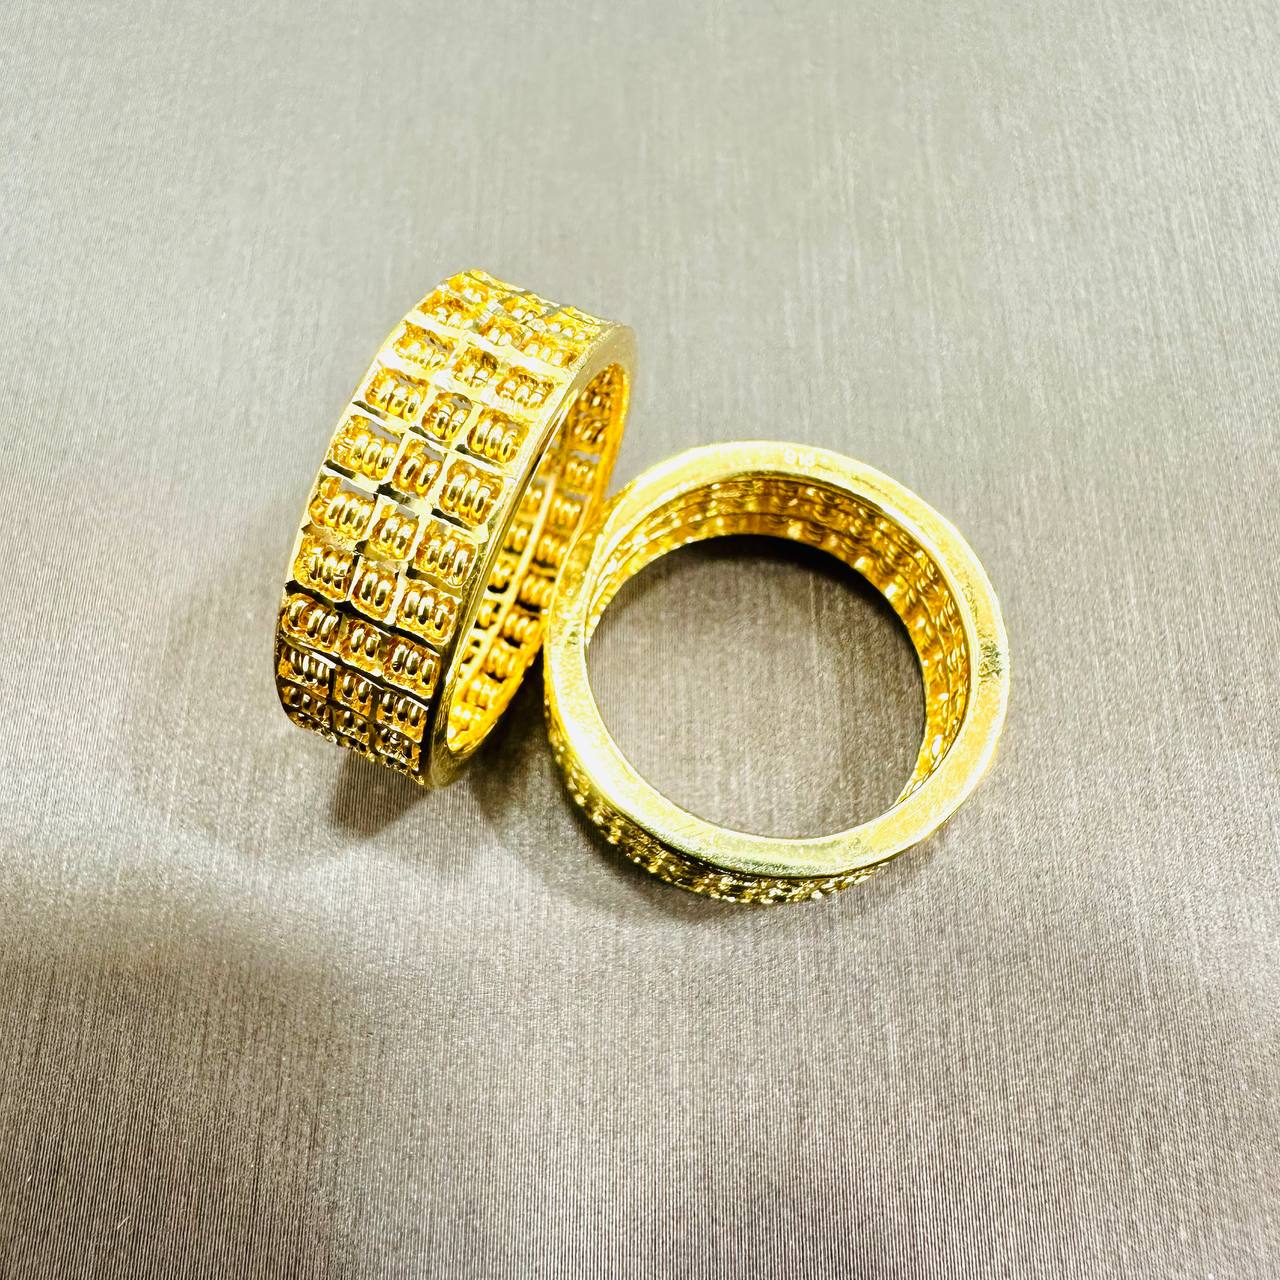 22k / 916 Gold Abacus Ring (Side Smooth Finish) V4-916 gold-Best Gold Shop